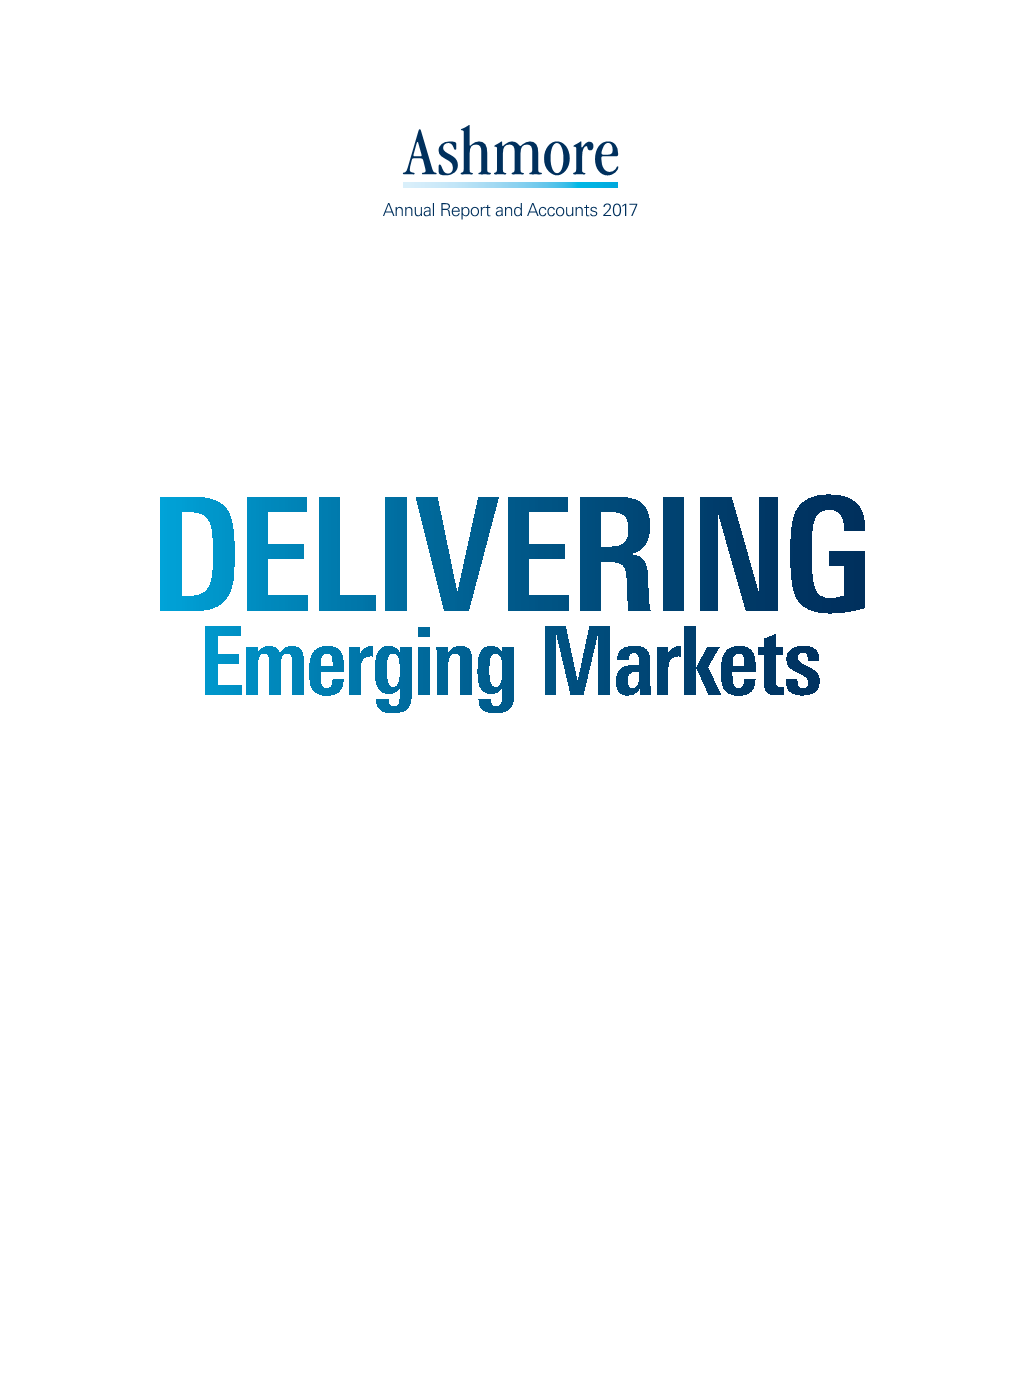 Emerging Markets Contents